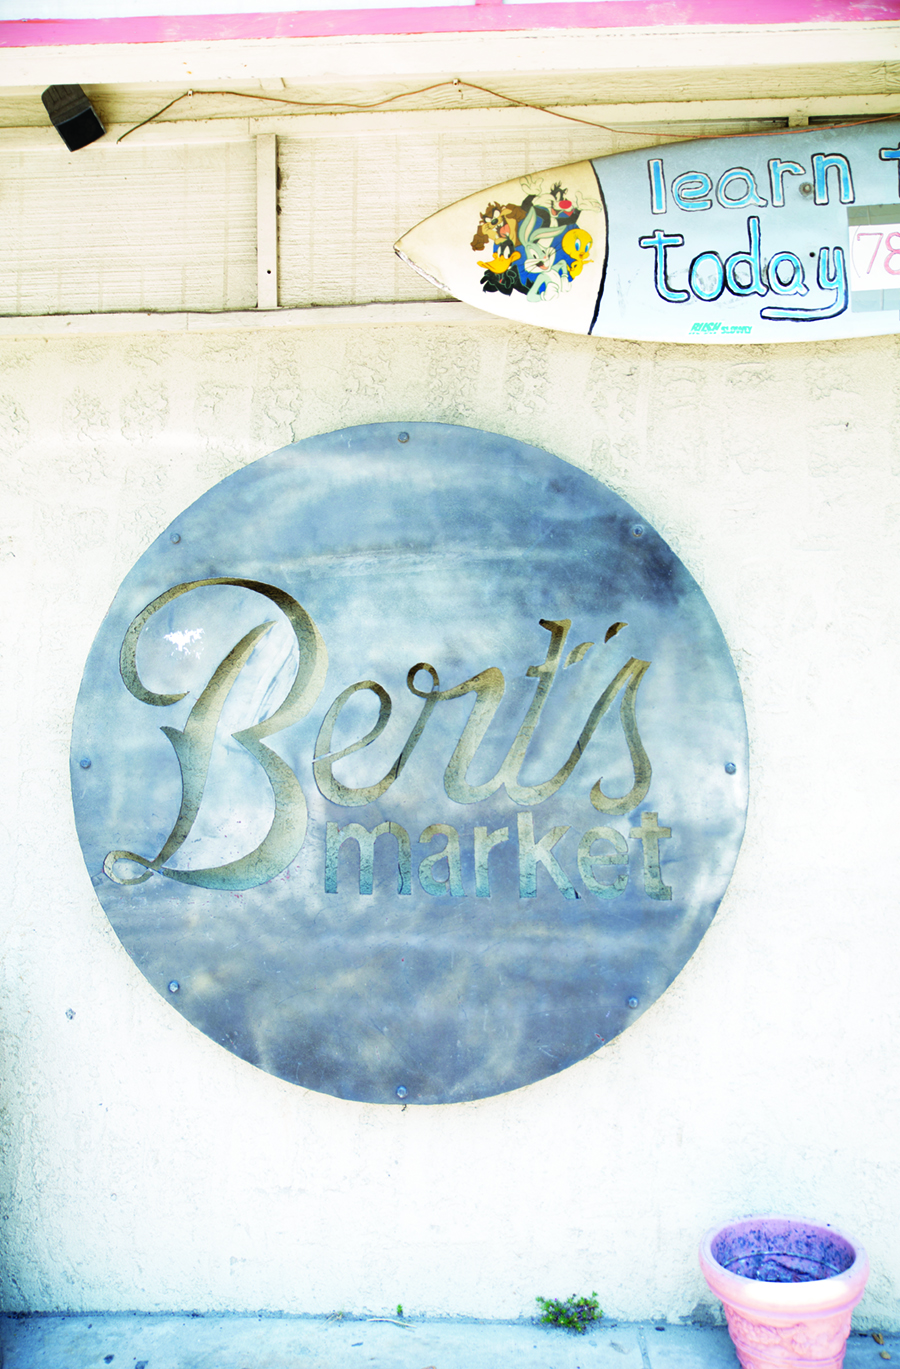 Berts Market sign on Folly Beach